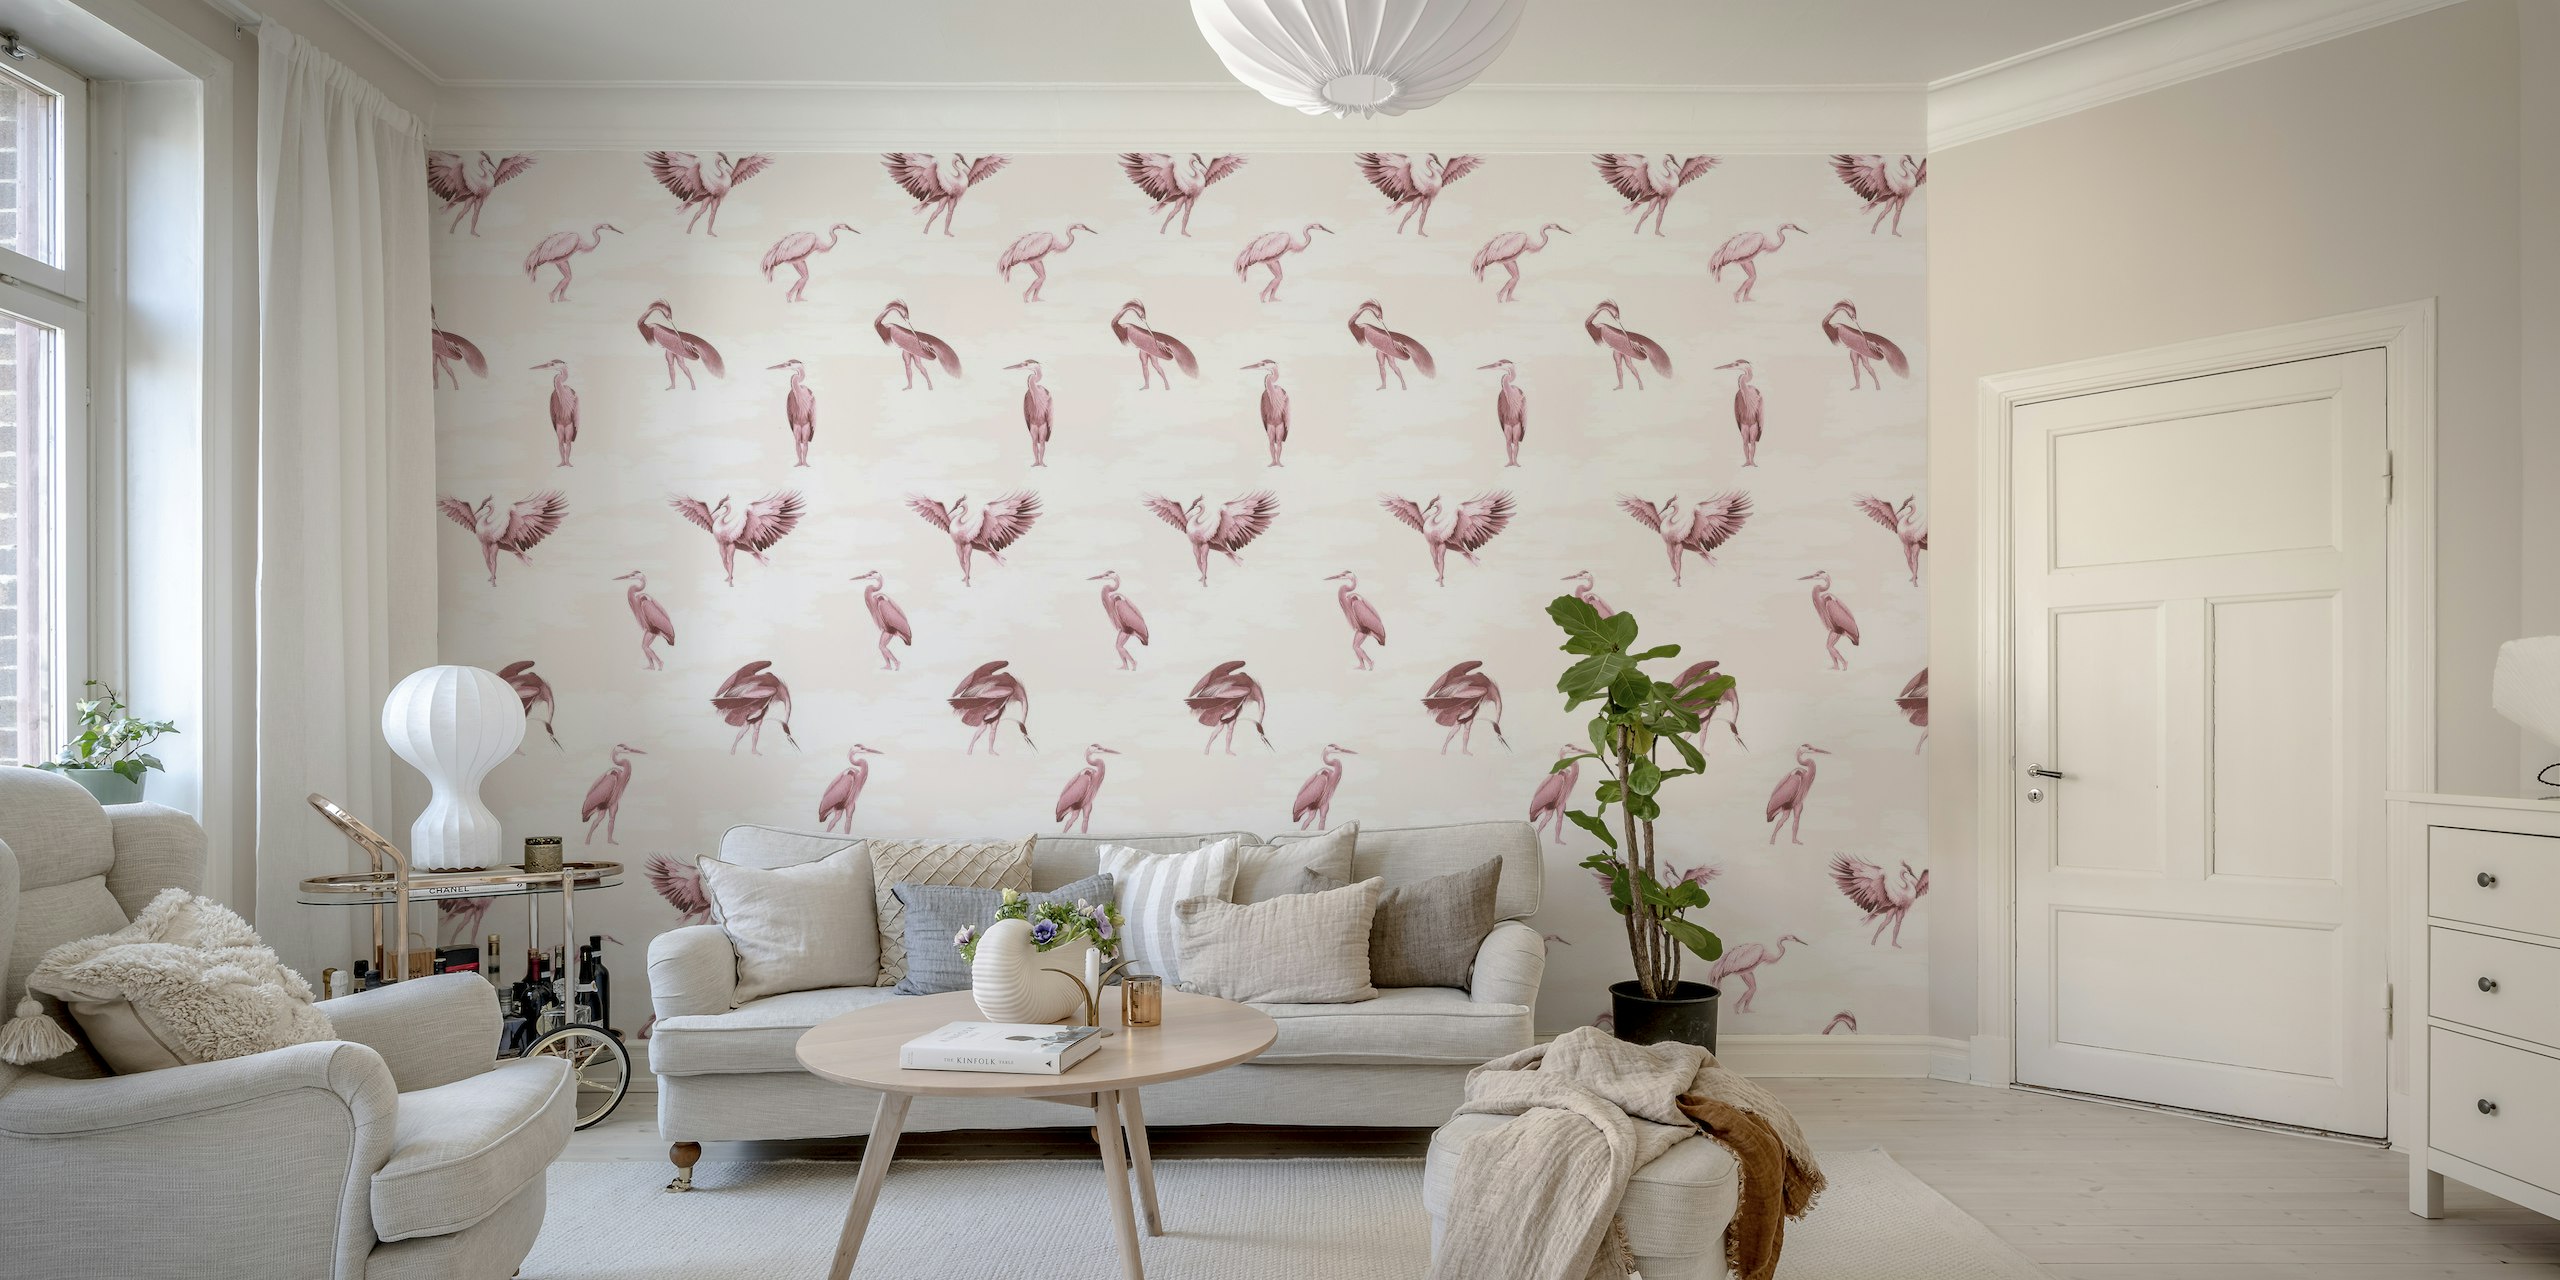 Crane Bird-boys in Vintage Pink zidni mural s elegantnim pticama ždralovima na nježno ružičastoj pozadini